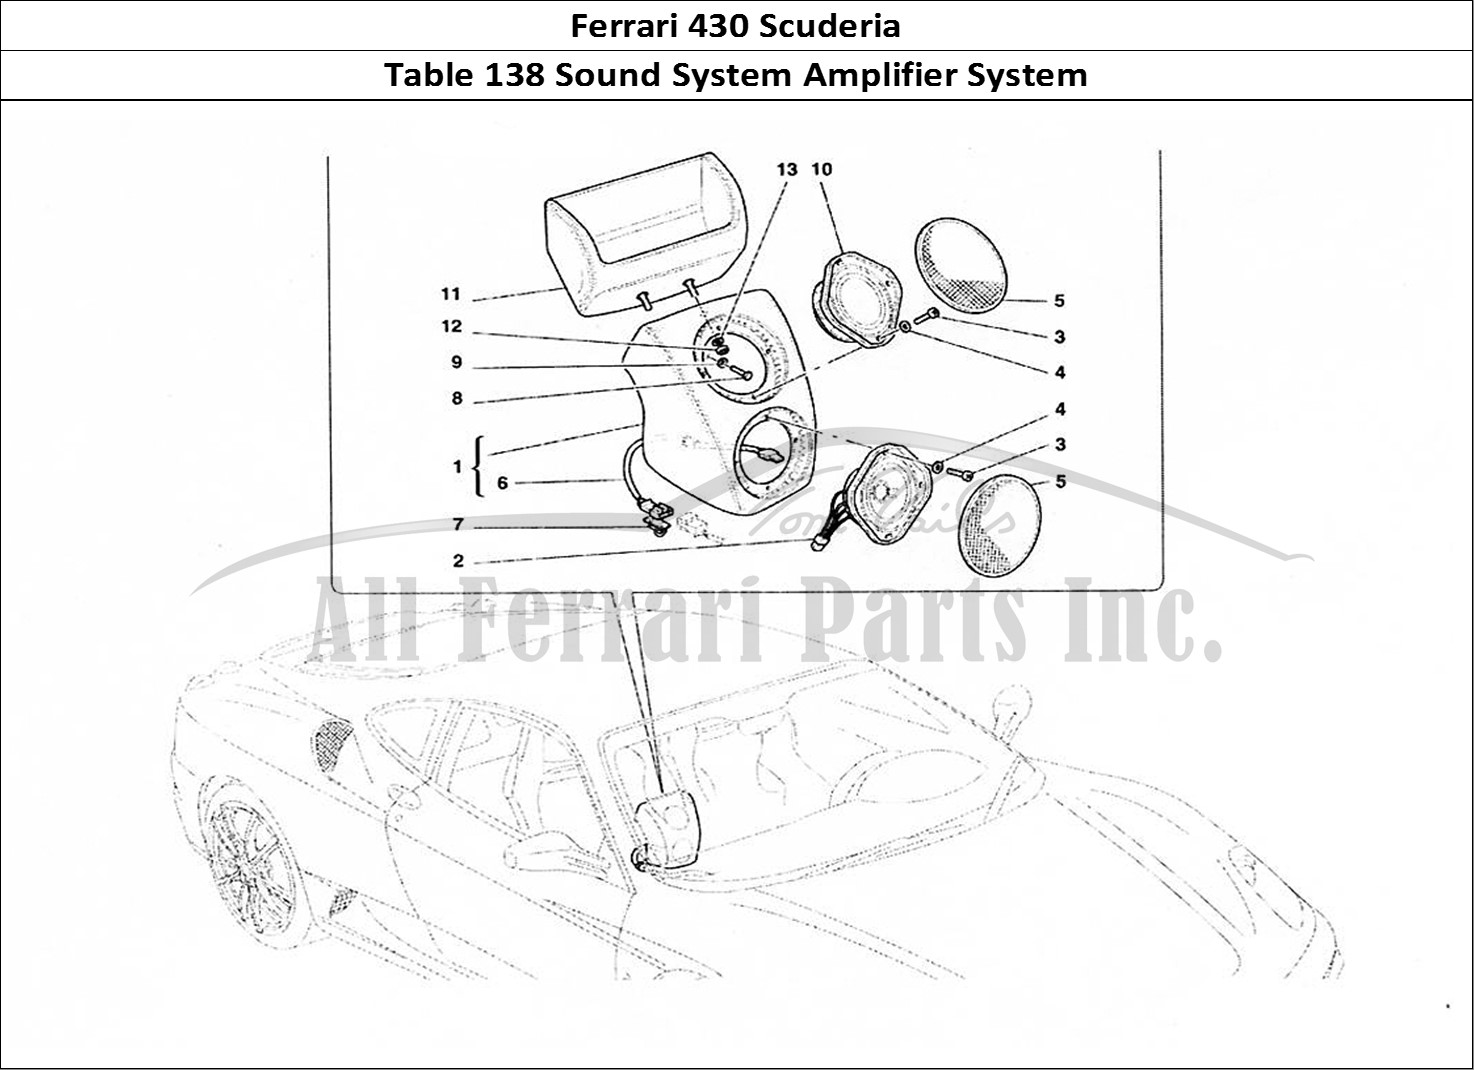 Ferrari Parts Ferrari 430 Scuderia Page 138 Radio Amplifier System